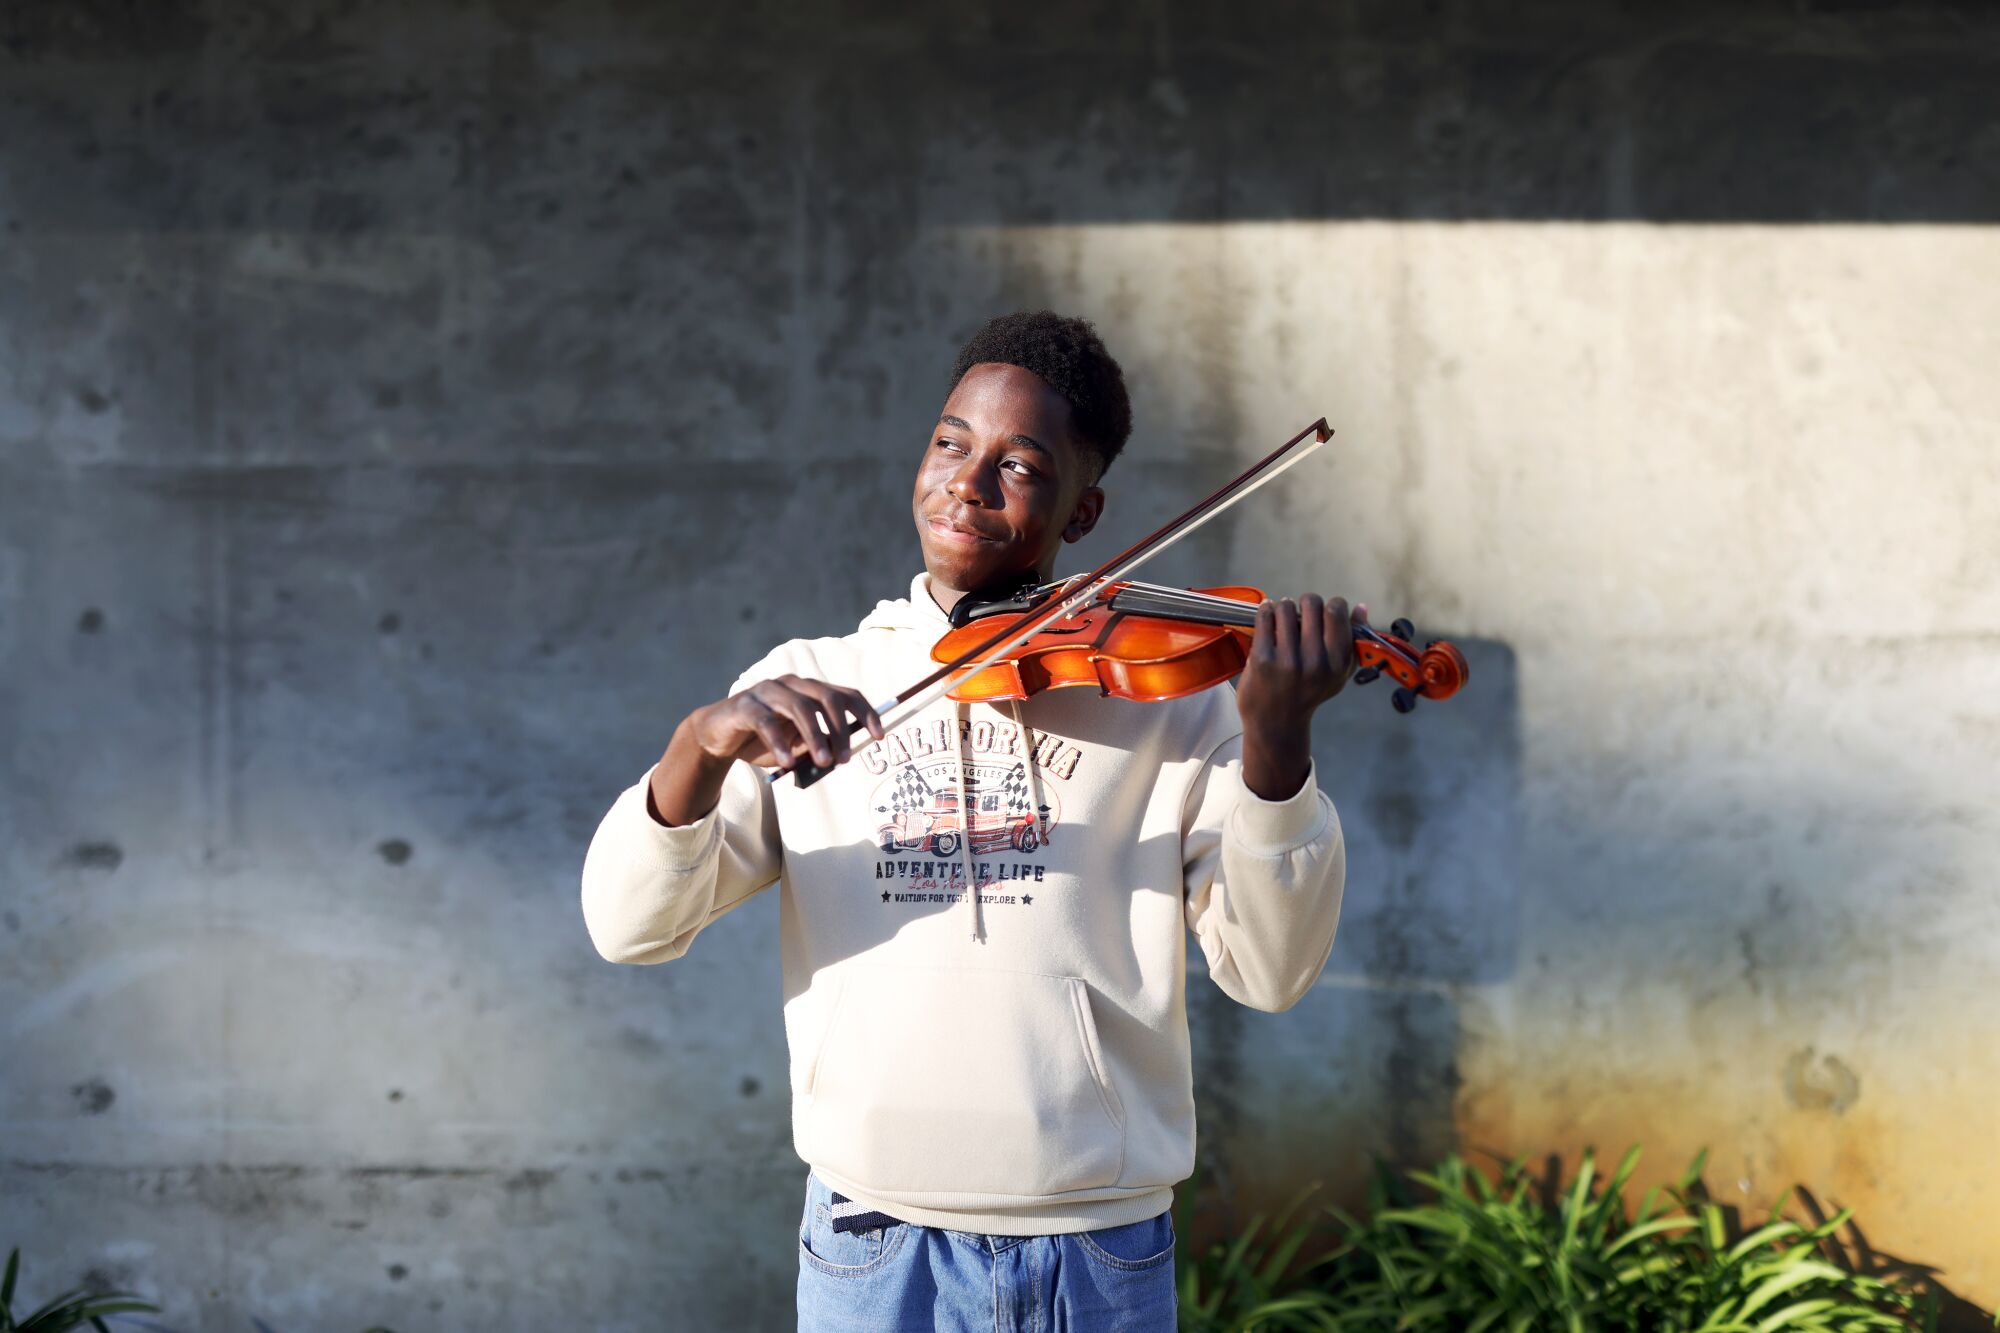 A teenager plays a violin.